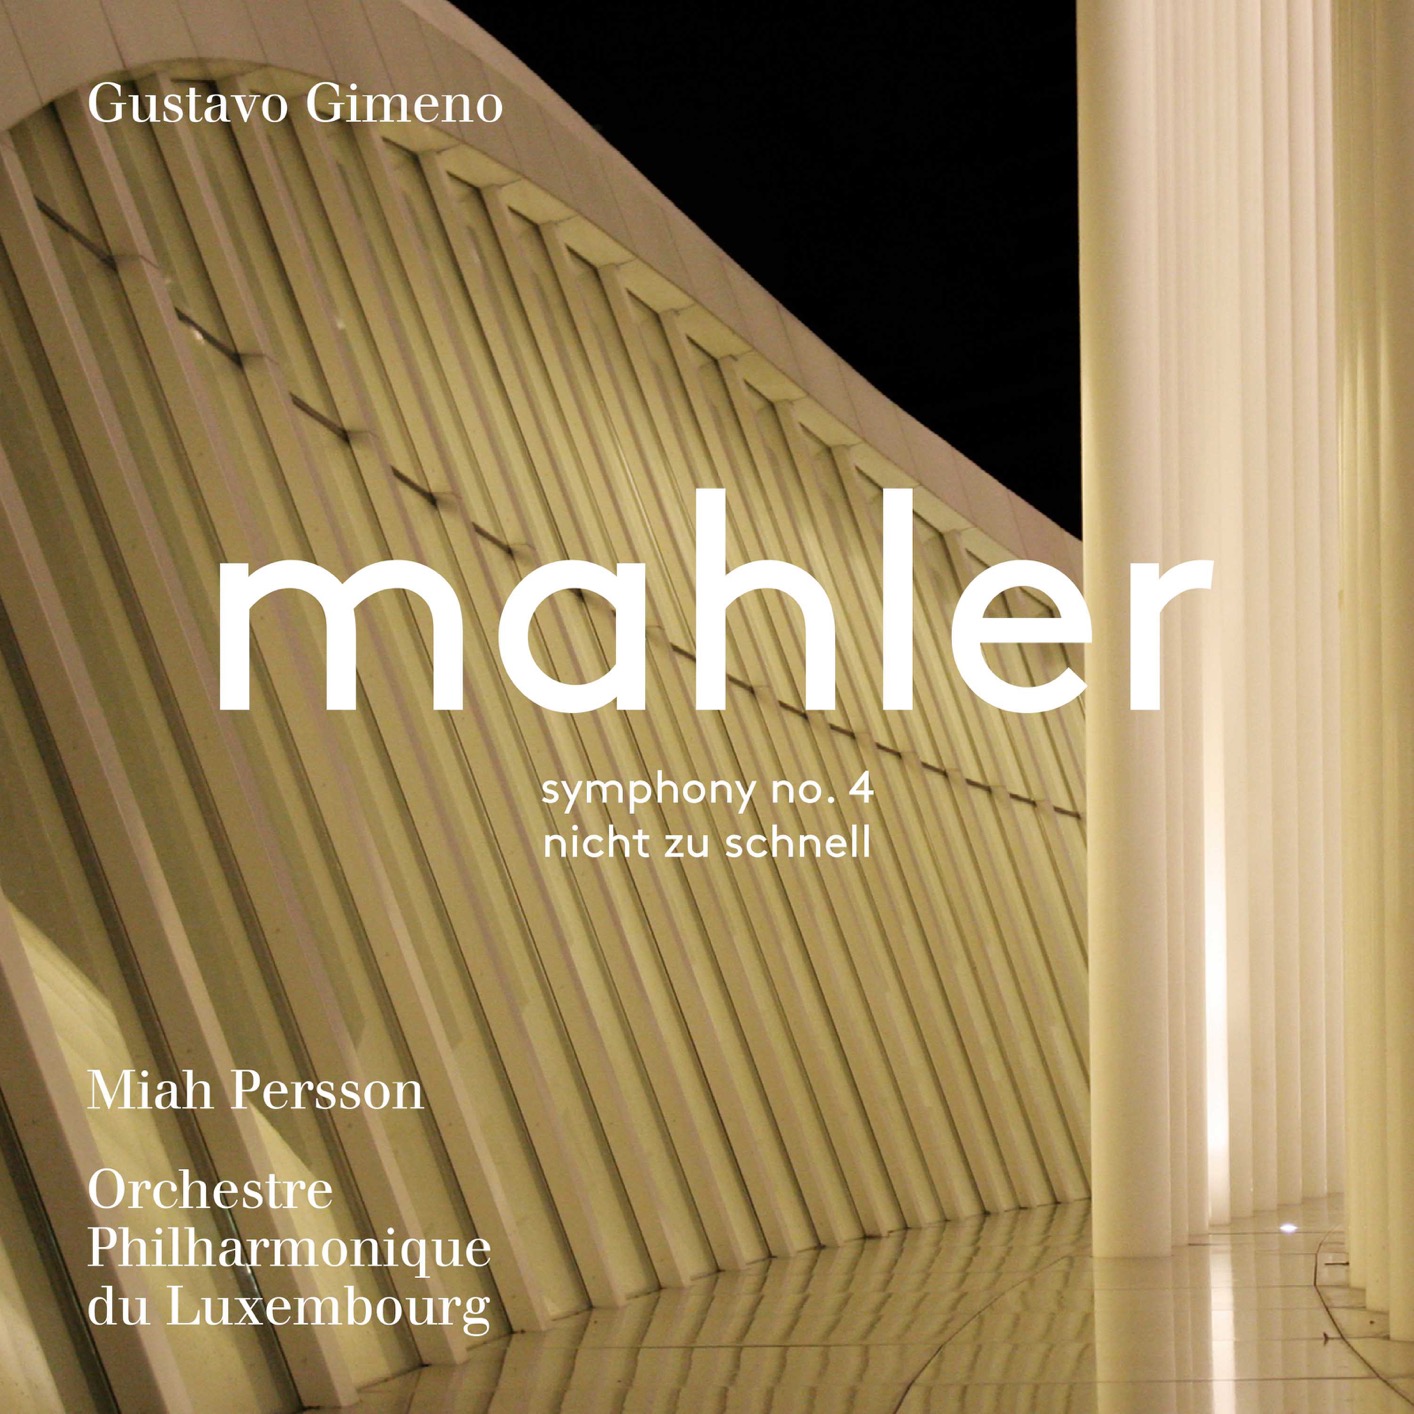 Gustavo Gimeno - Mahler: Symphony No. 4 in G Major & Piano Quartet in A Minor (2018) [FLAC 24bit/96kHz]